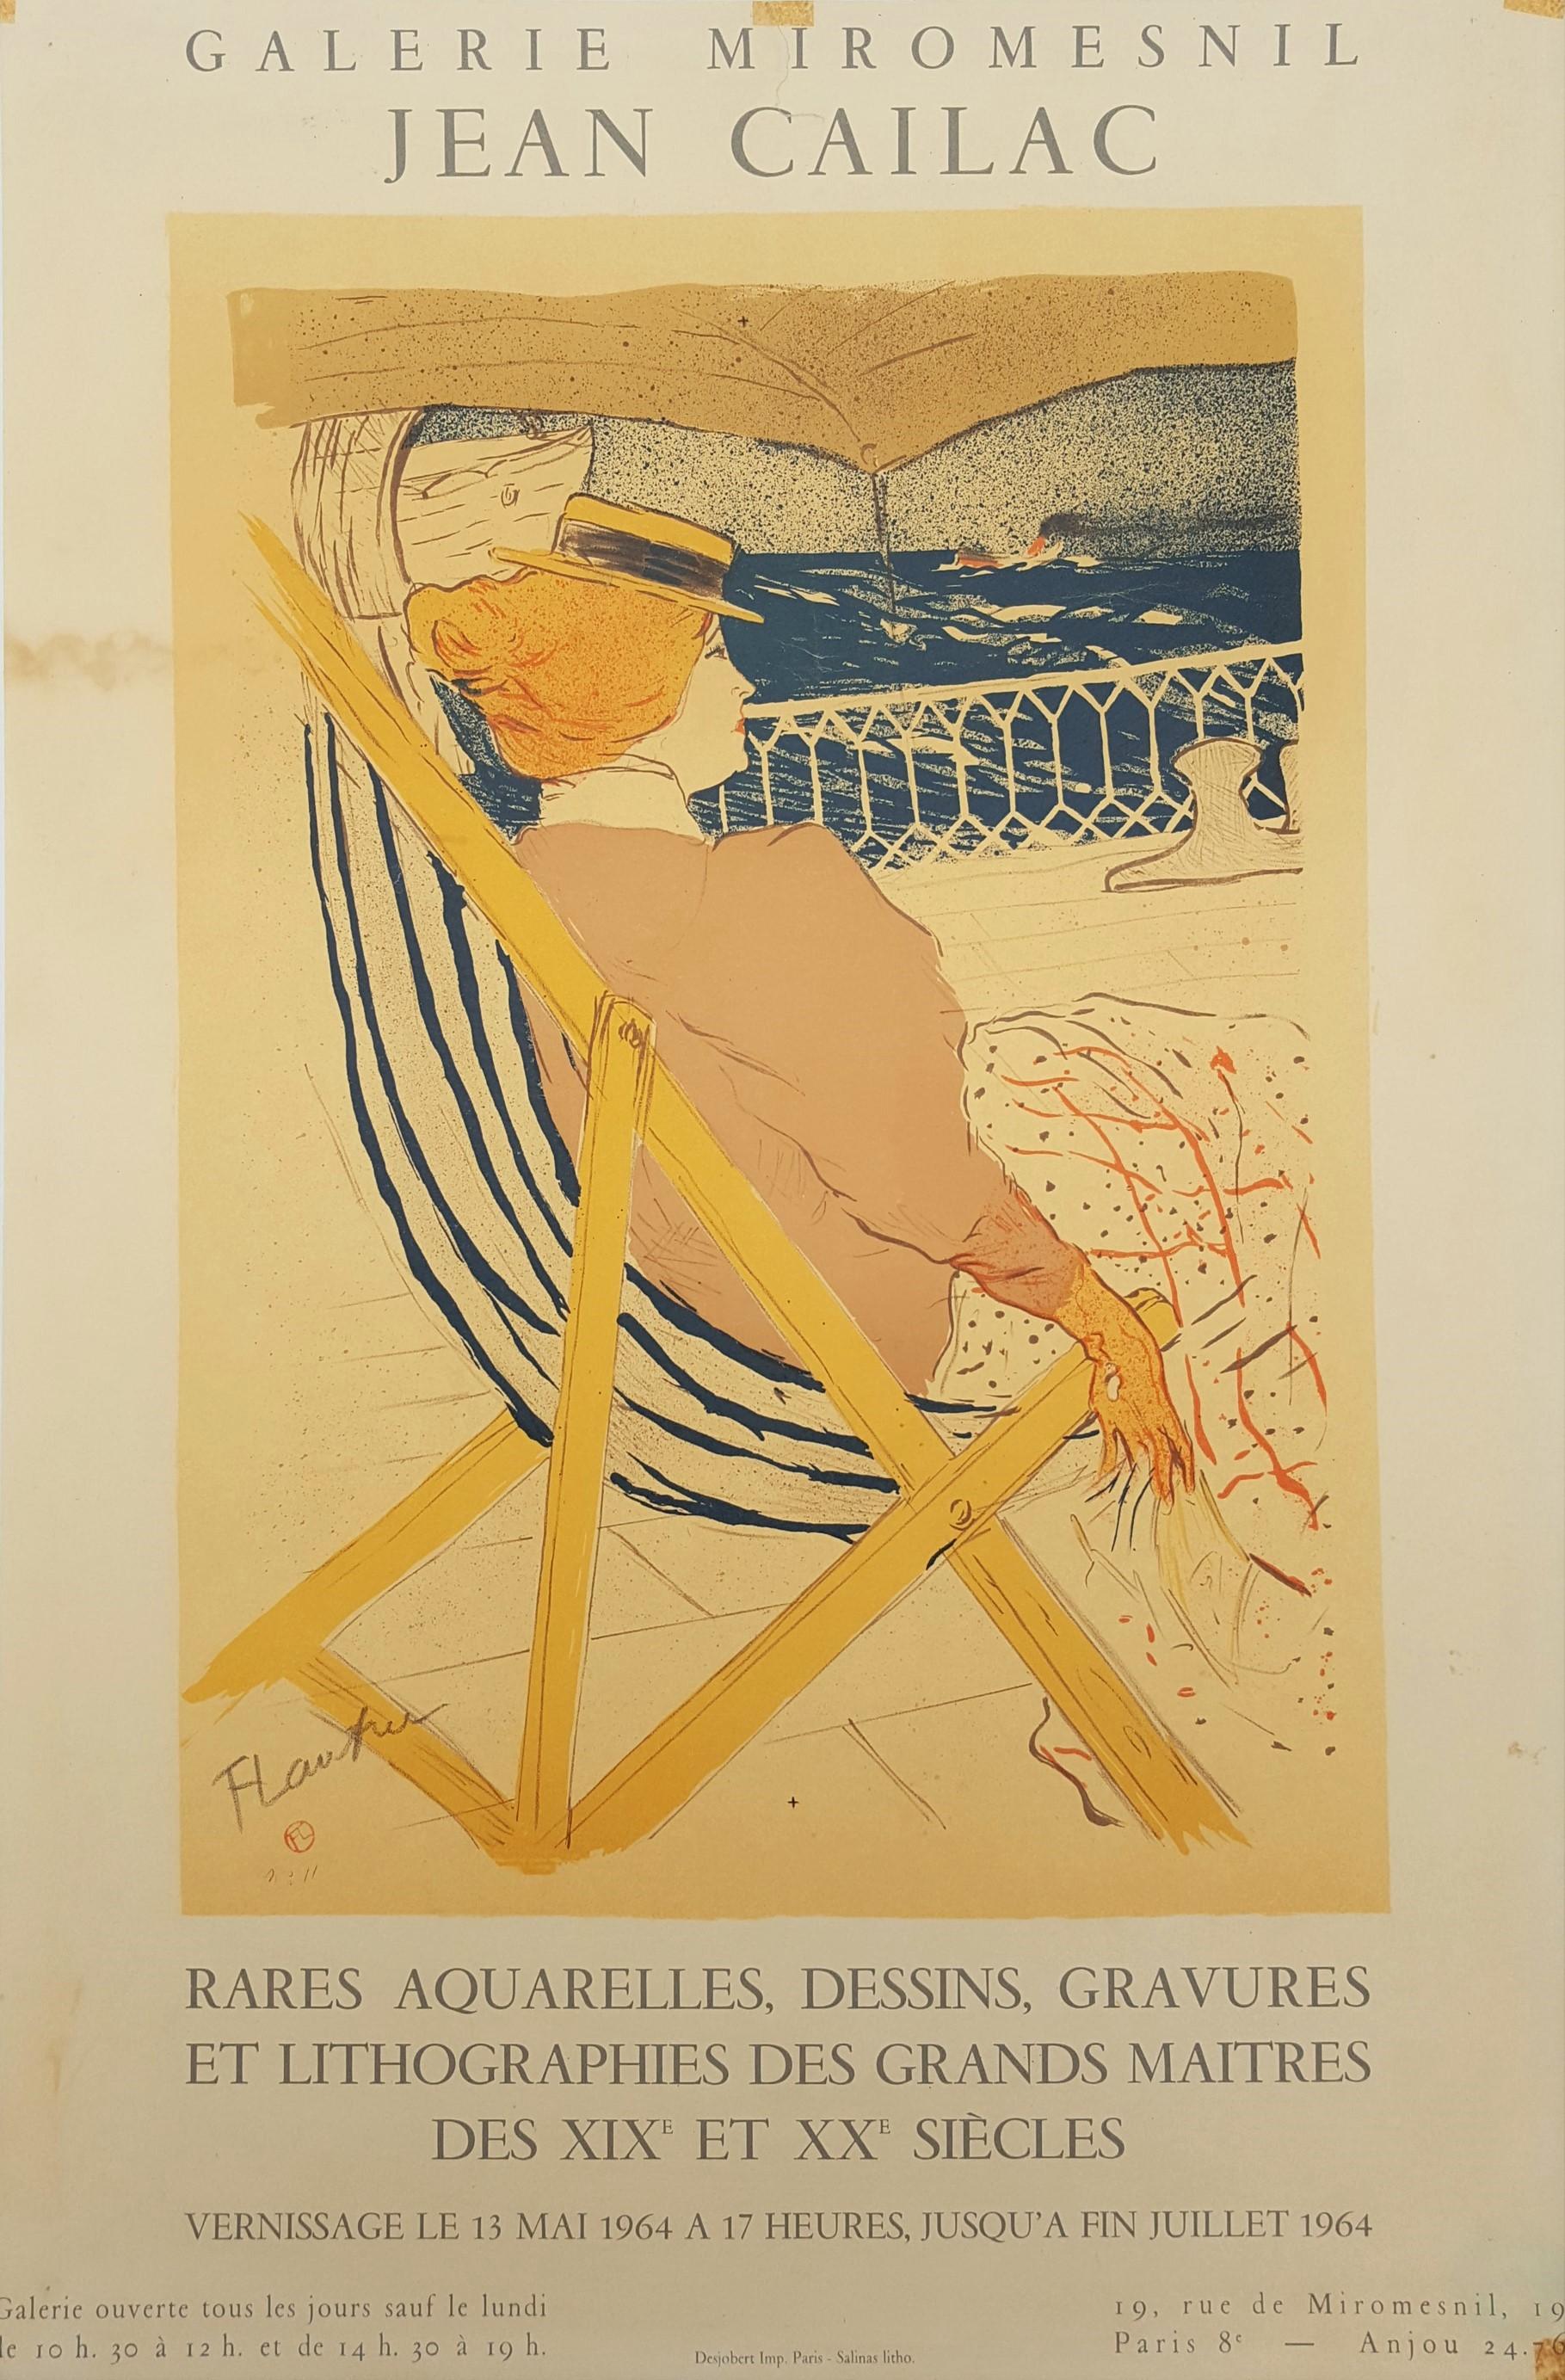 (After) Henri Toulouse Lautrec Figurative Print - Galerie Miromesnil Jean Cailac (Promenade en Yacht)